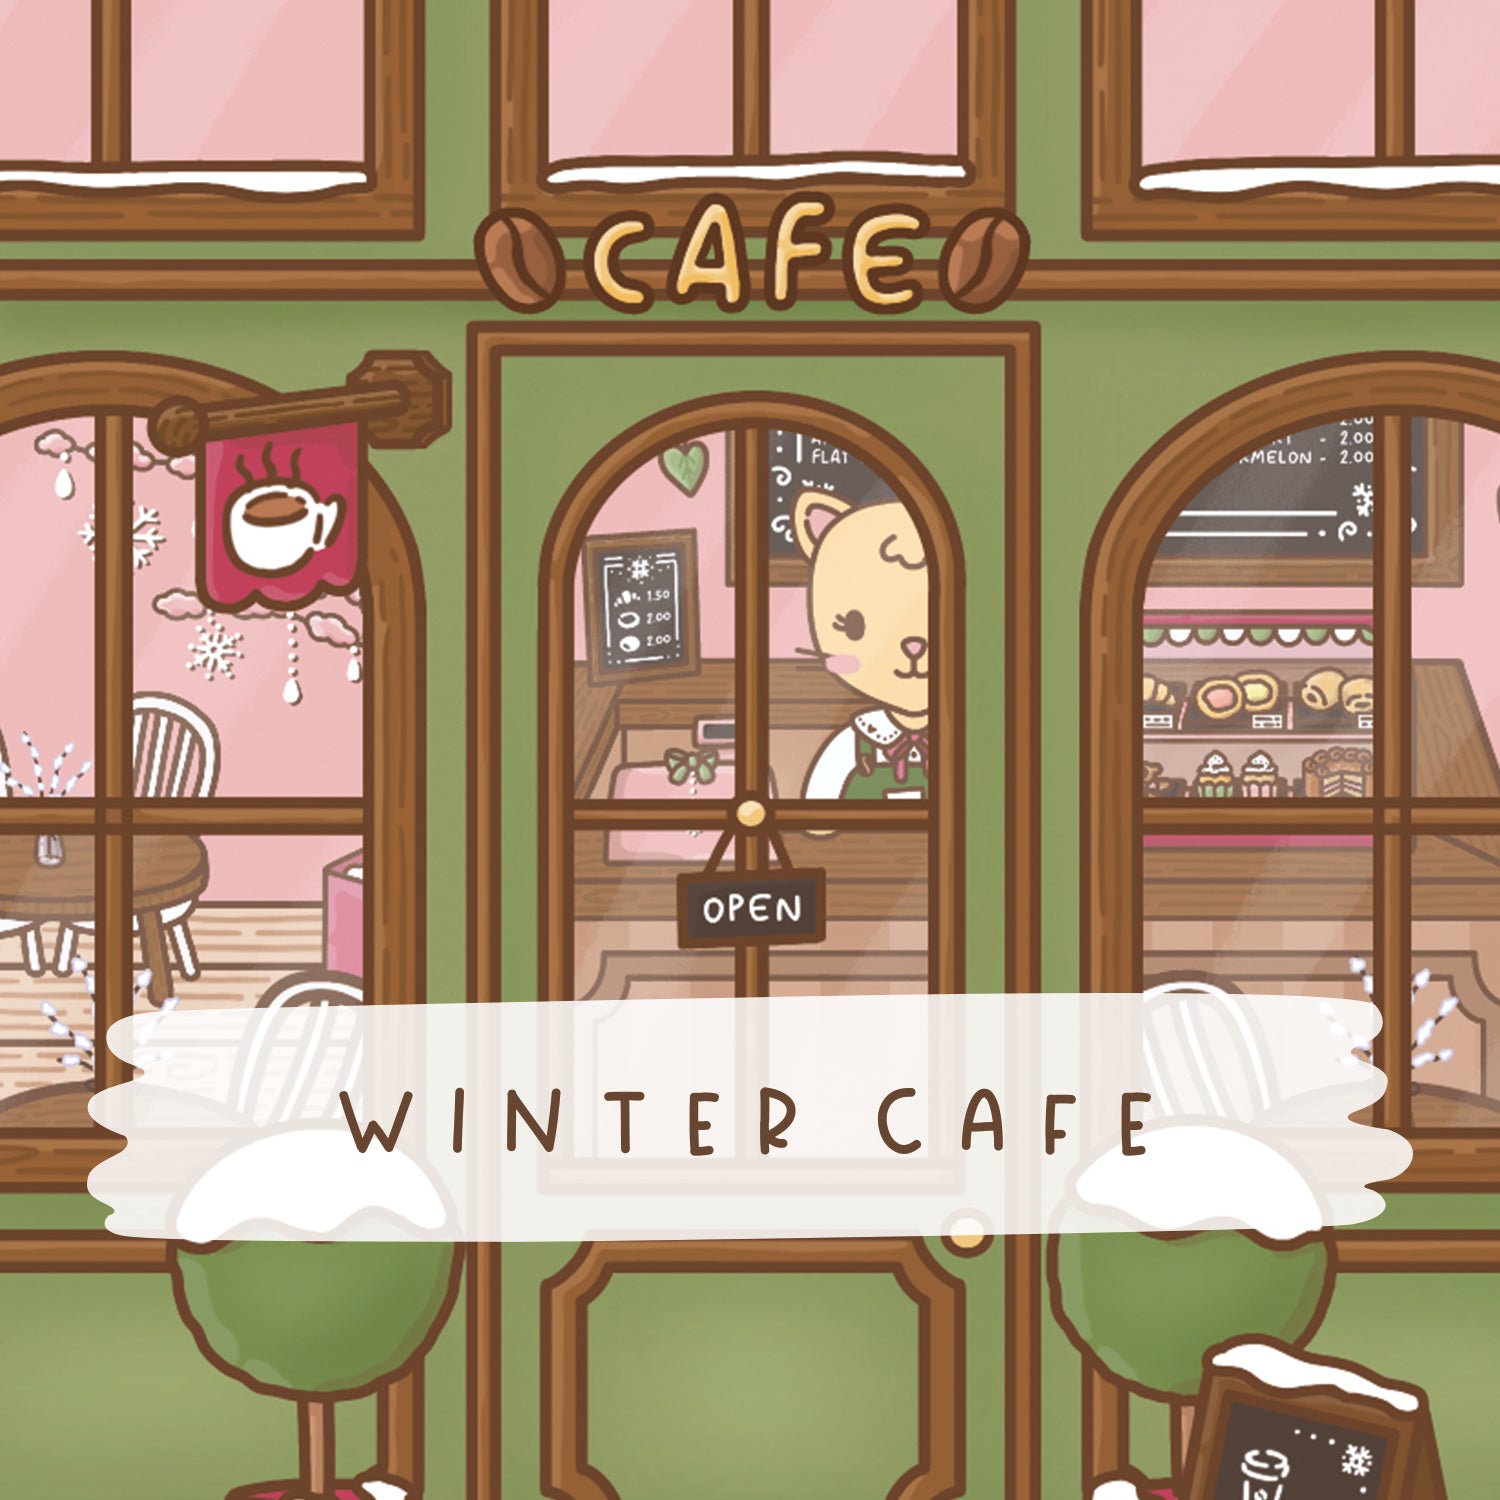 Winter Cafe